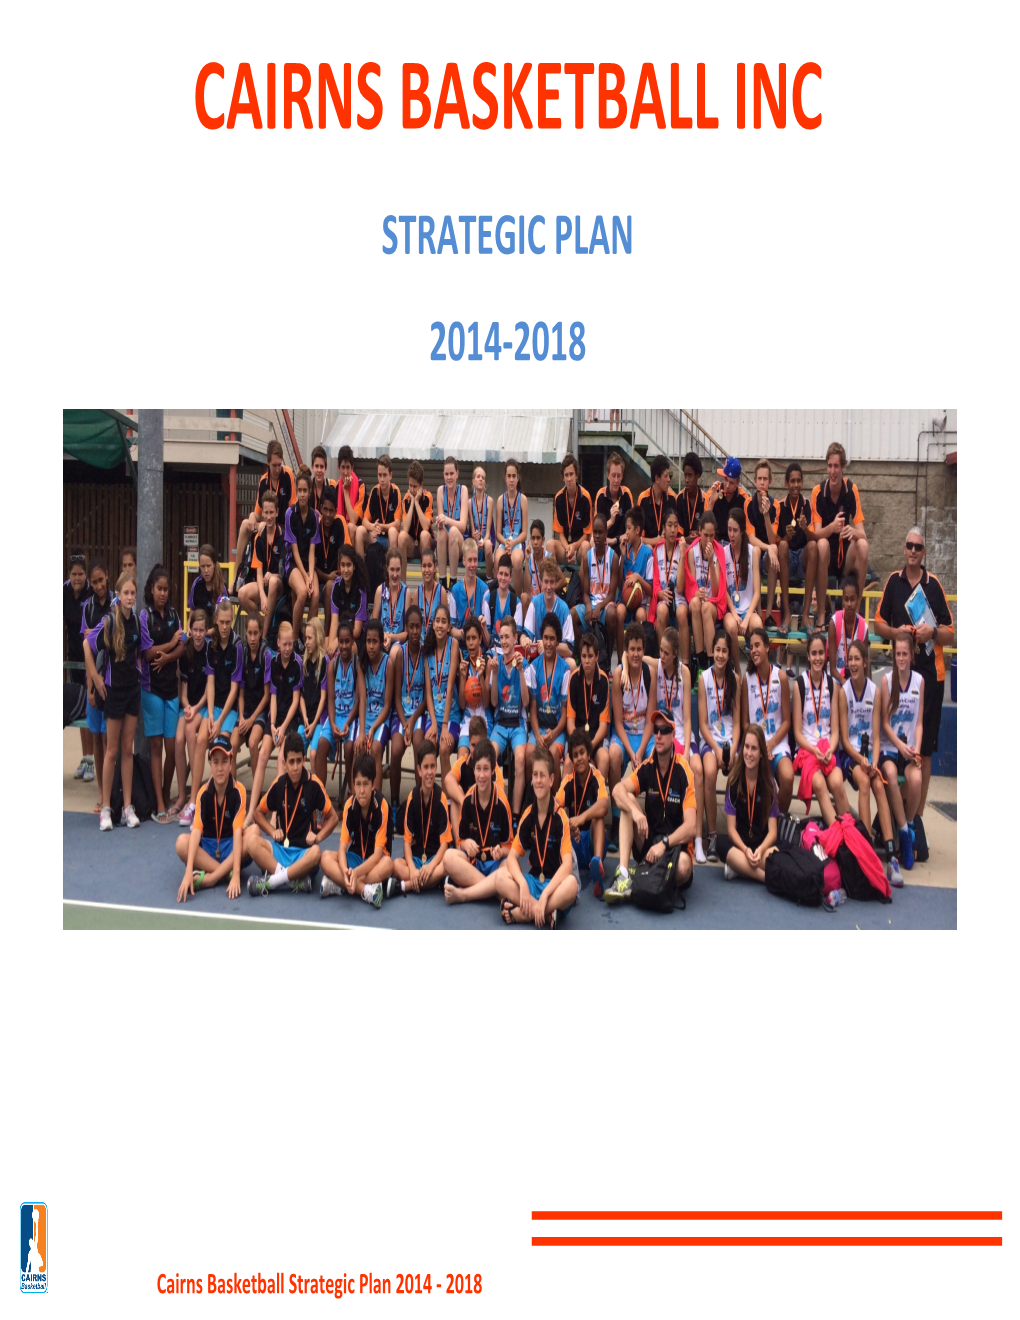 Cairns Basketball Inc Strategic Plan 2014-2018